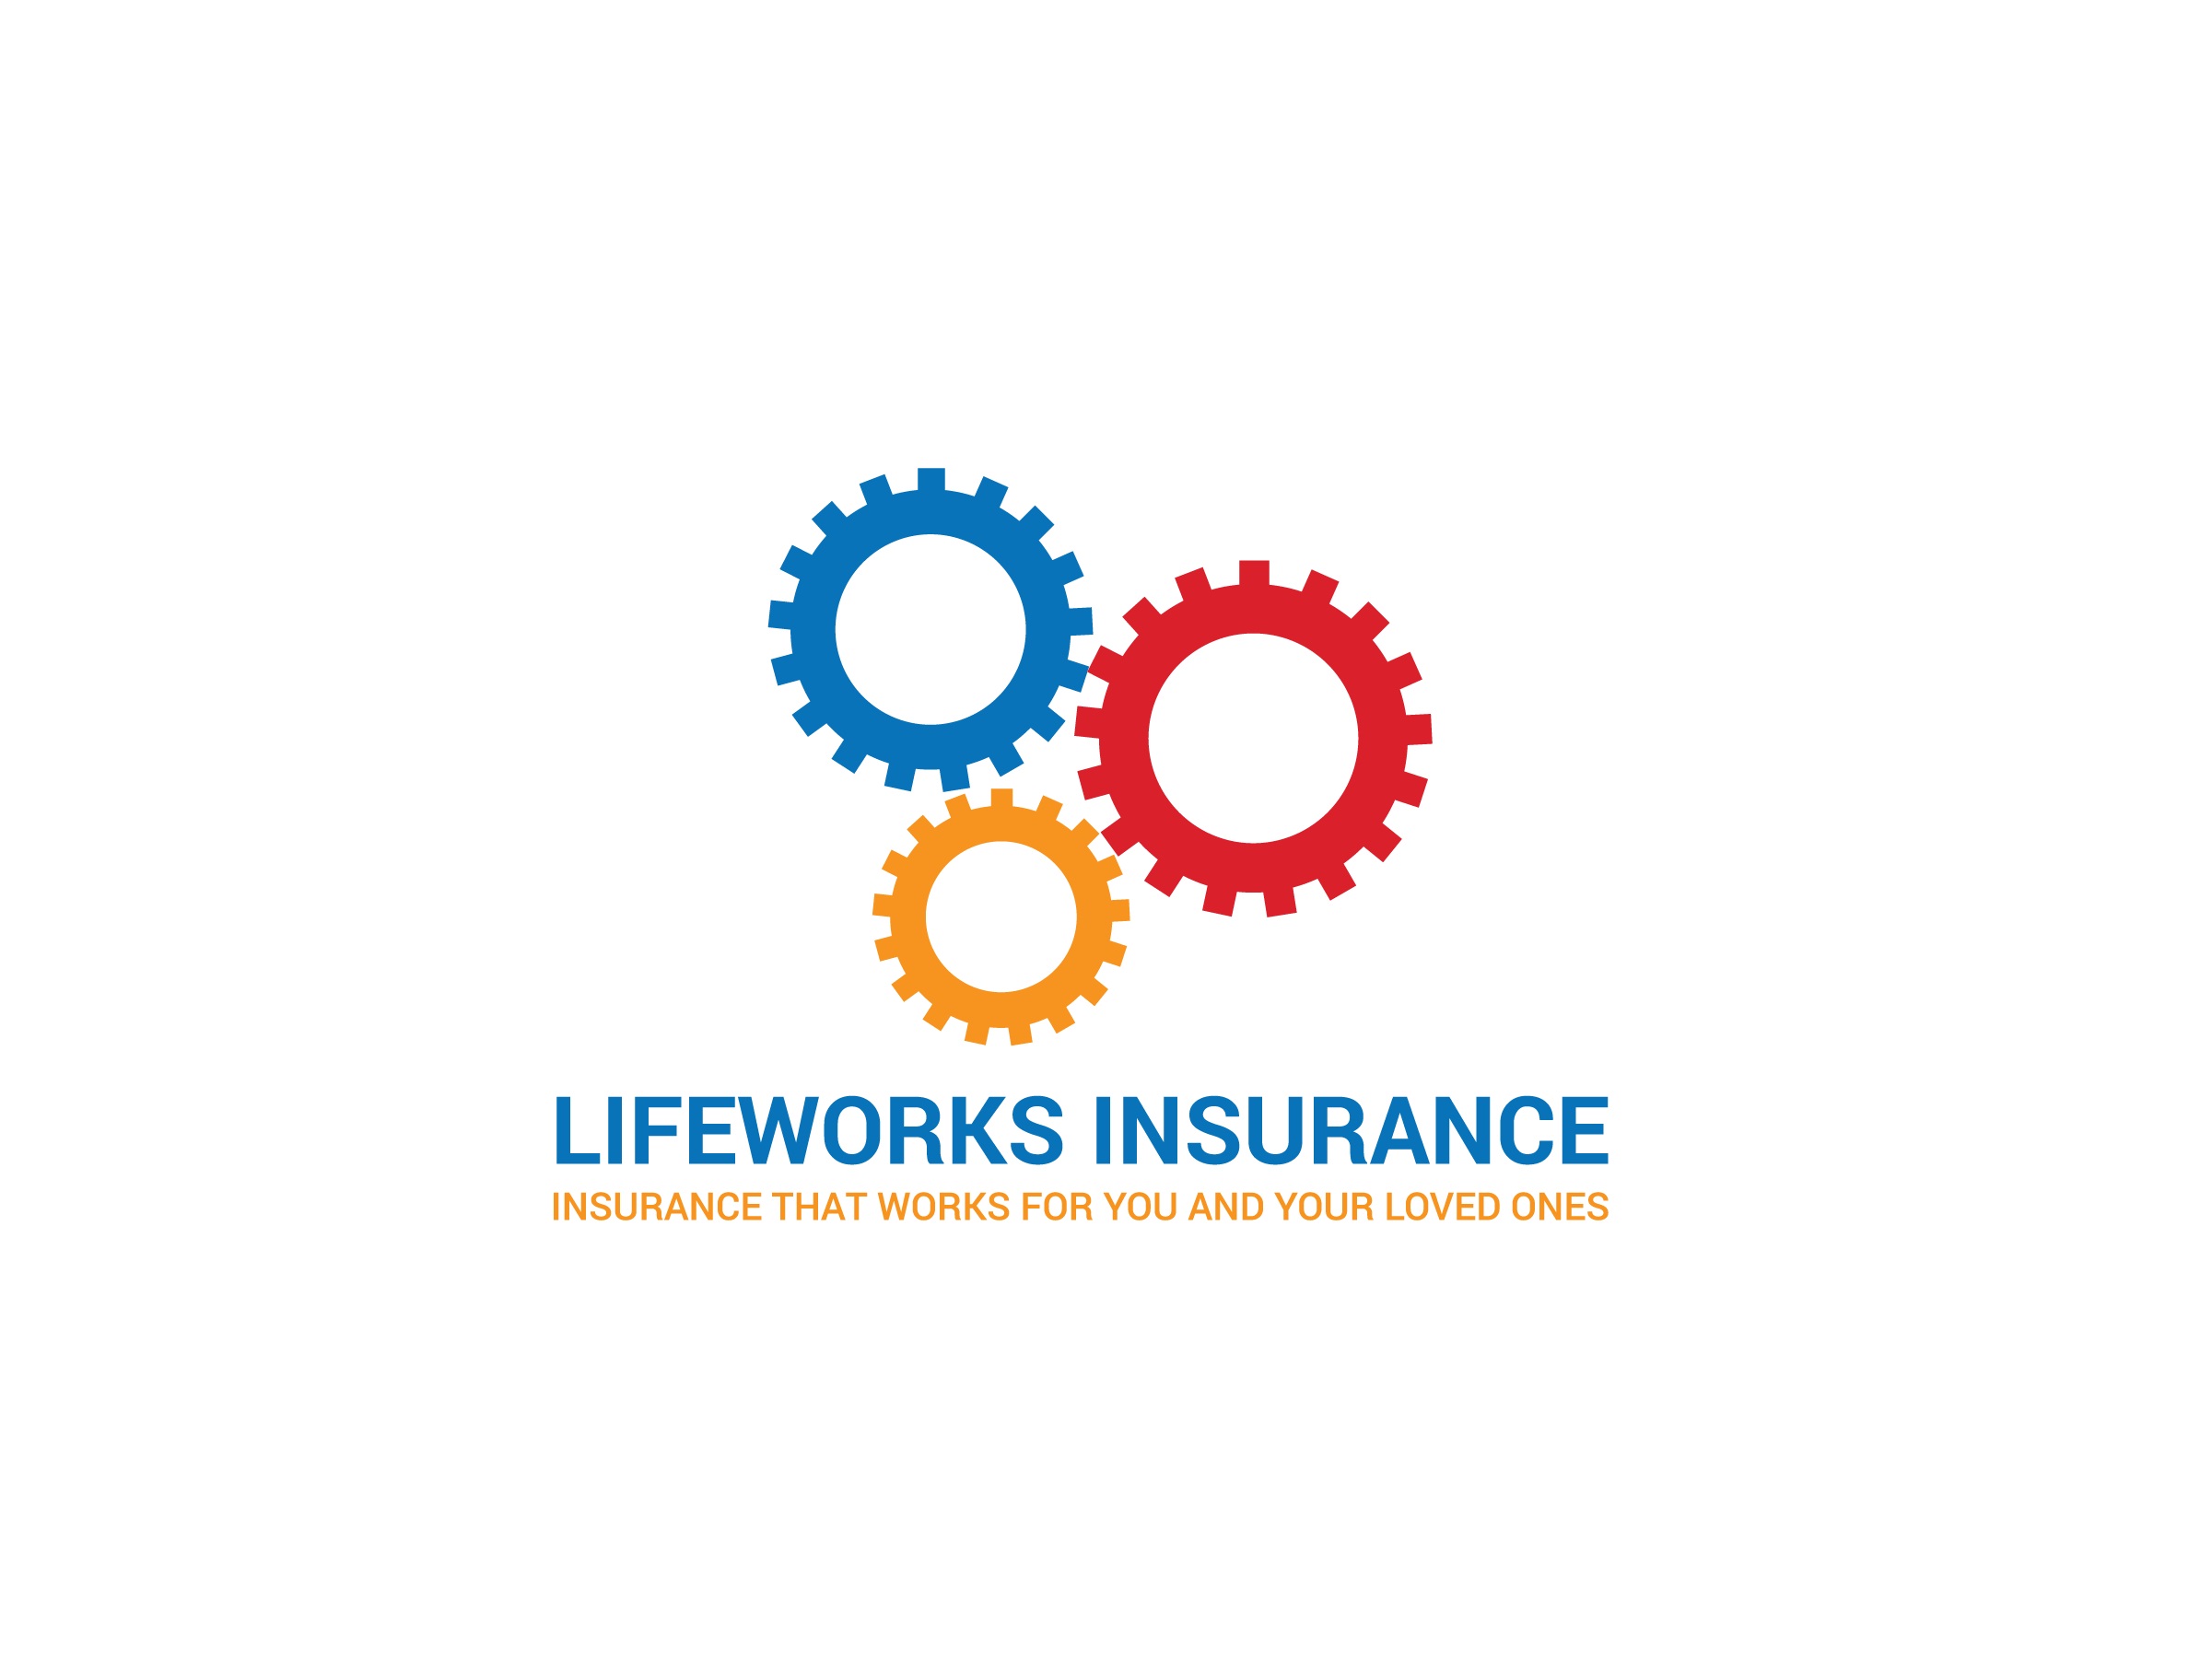 Lifeworks Insurance